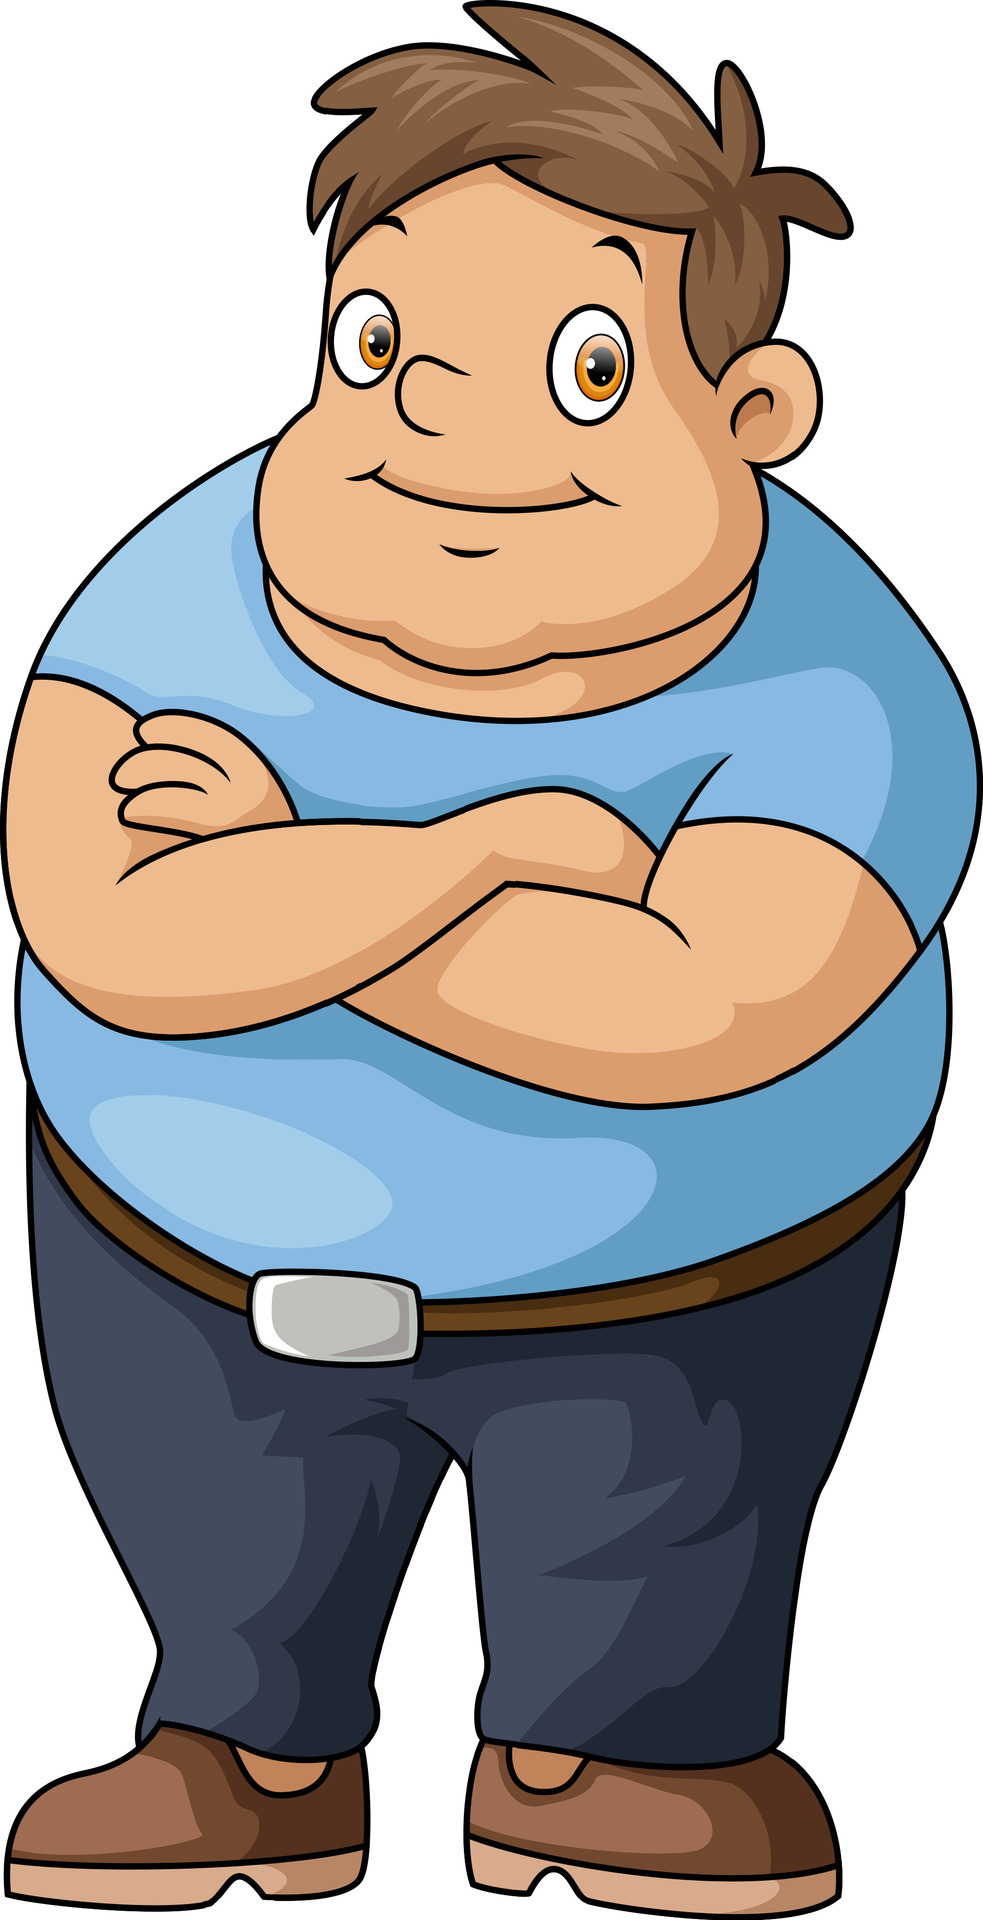 fat boy cartoon images